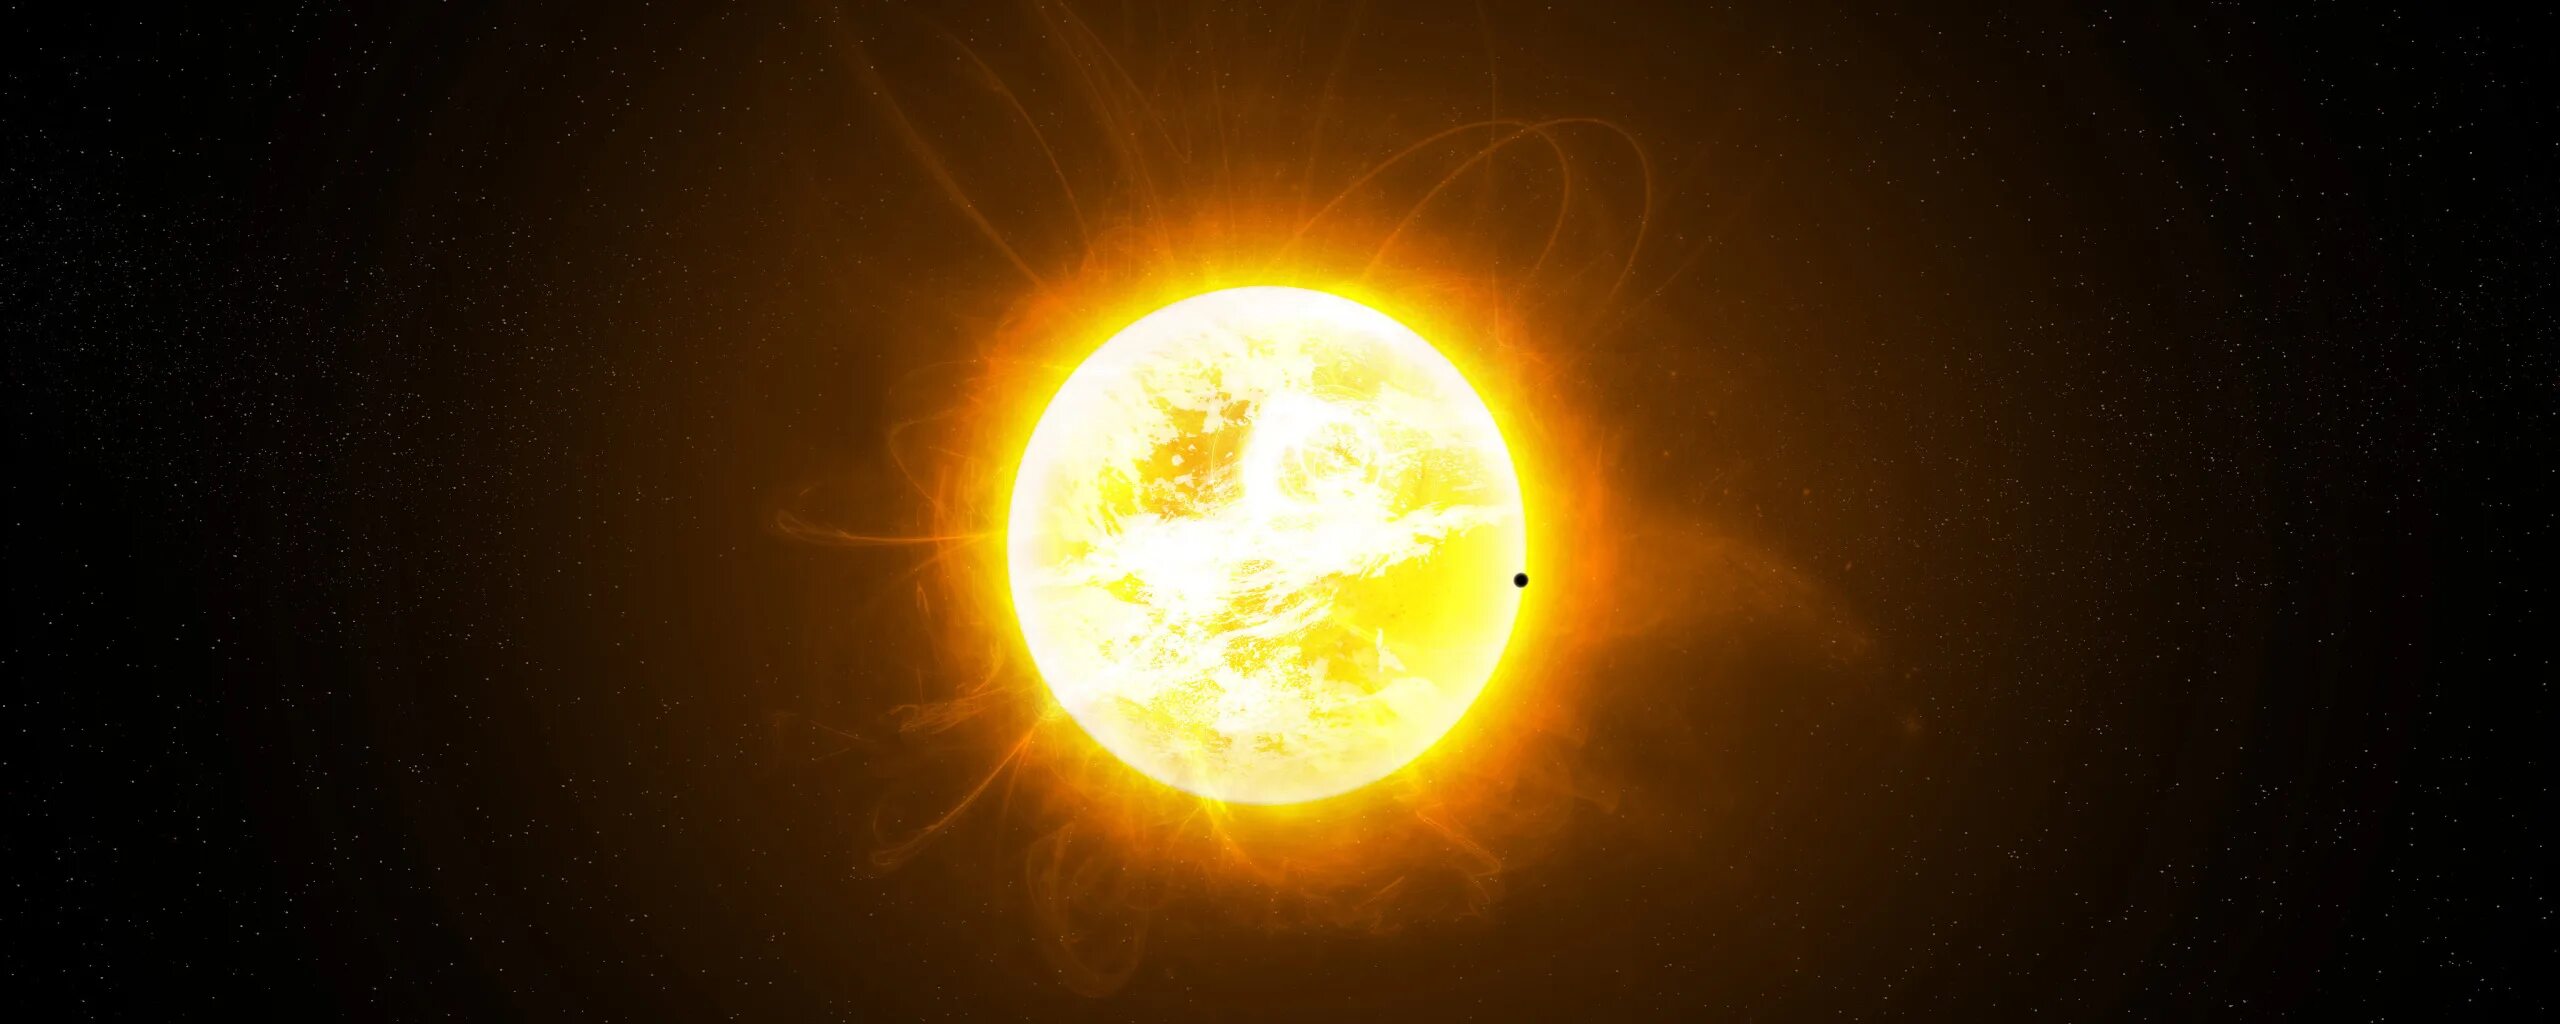 Солнце 4 апреля. Солнце в космосе. Солнце из космоса. Солнце вид из космоса. Яркое солнце из космоса.